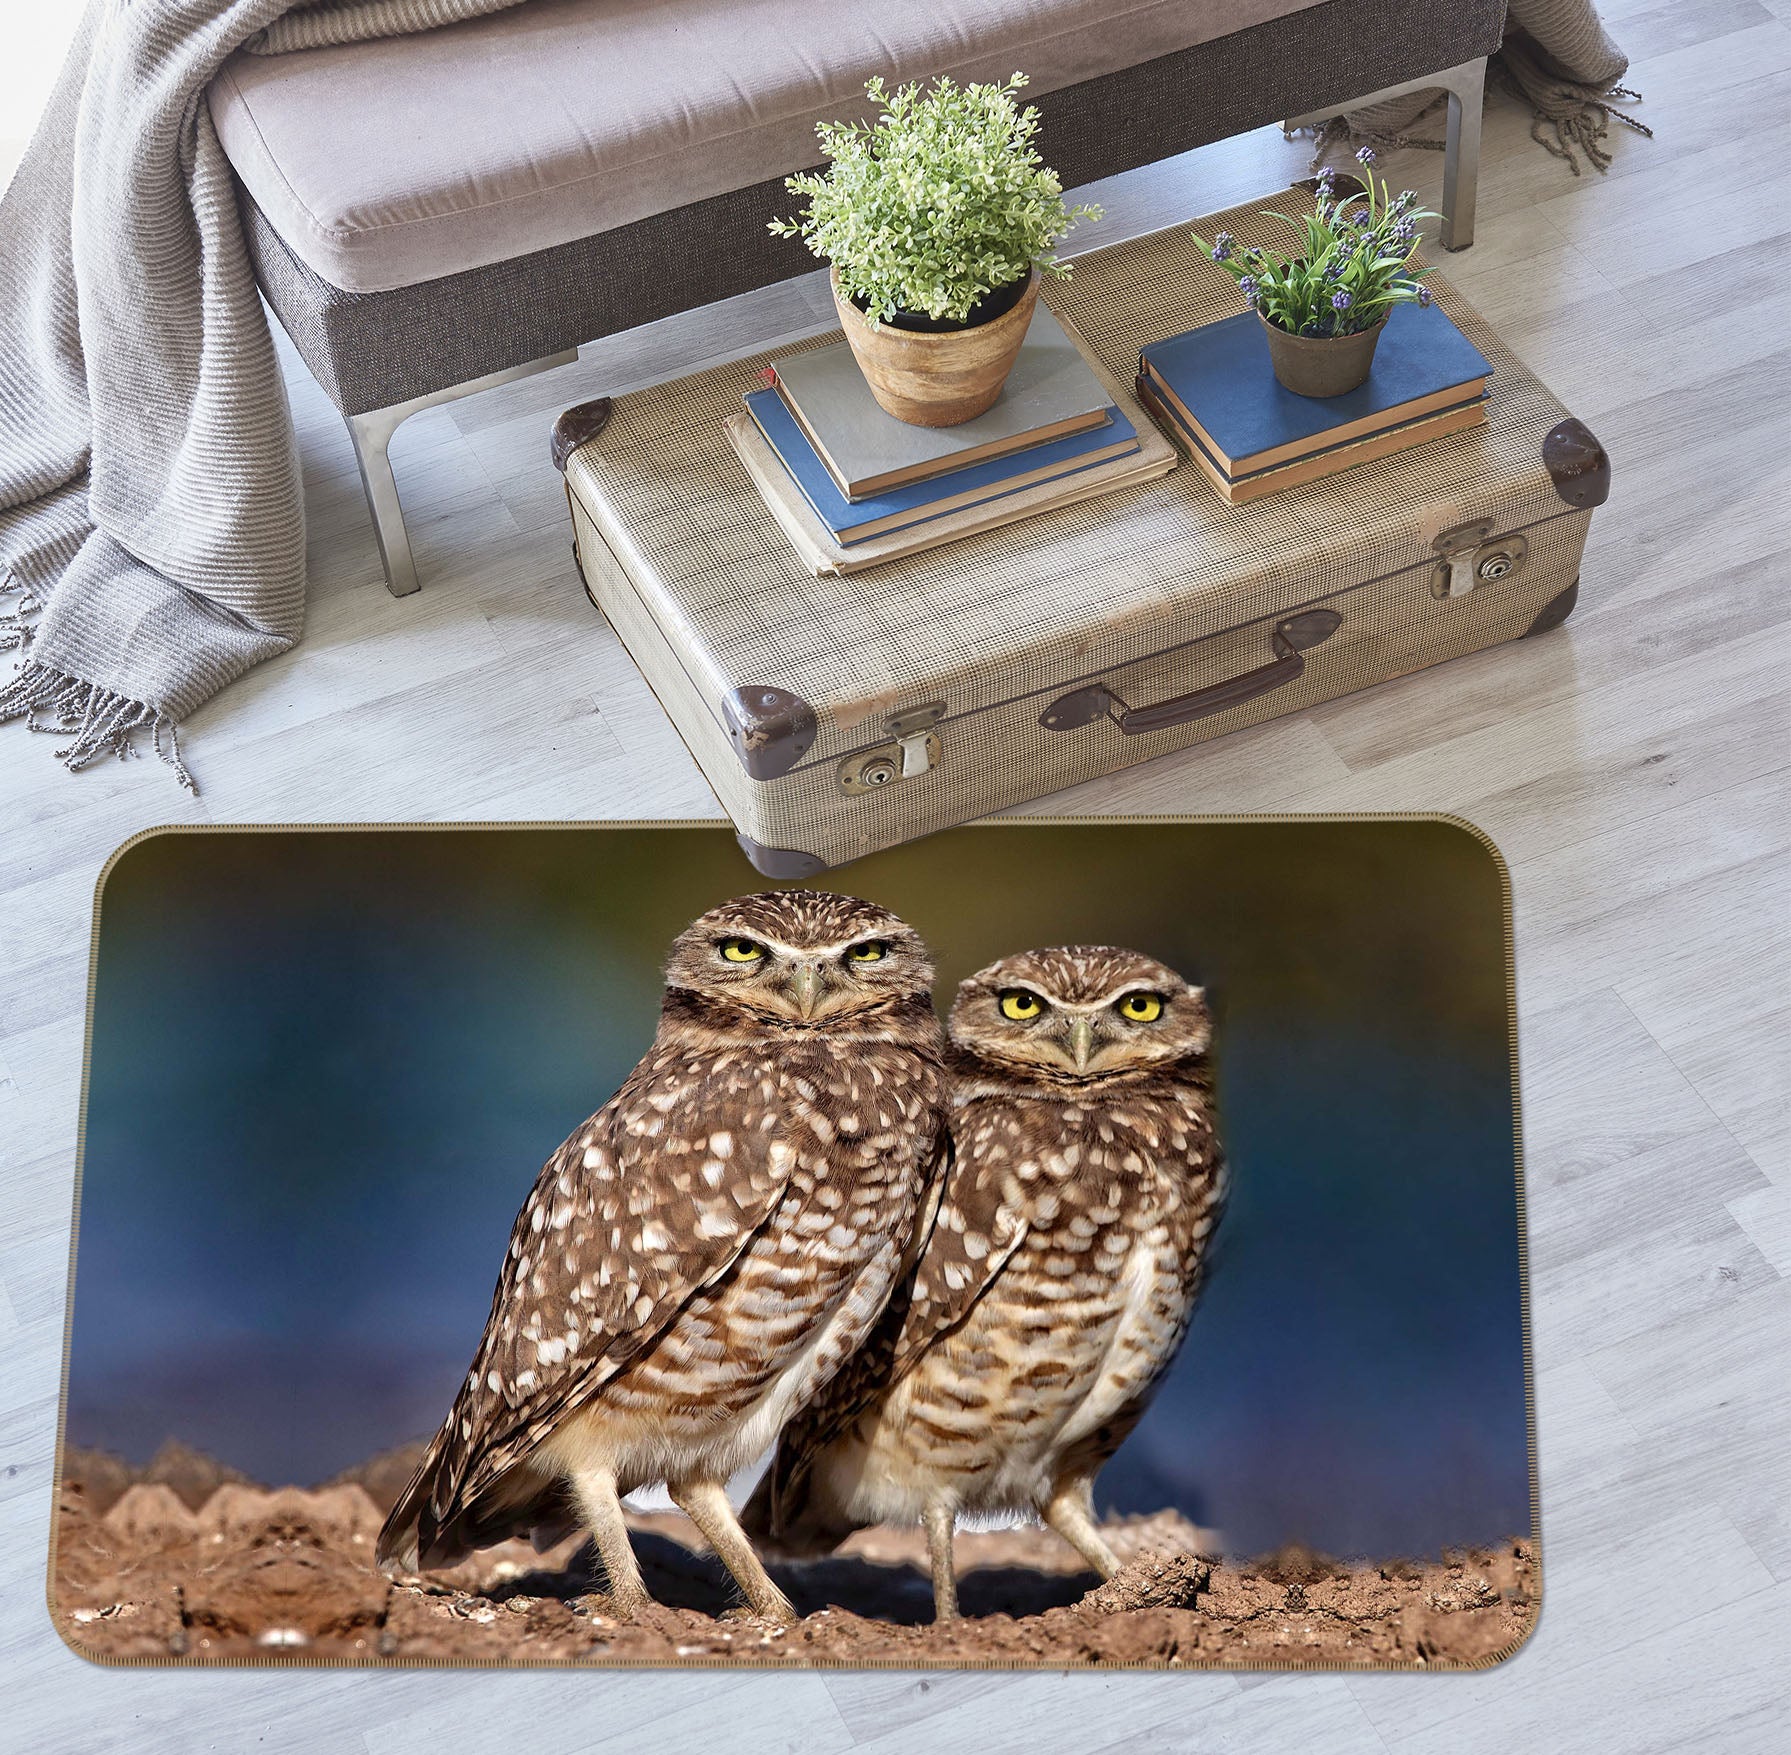 3D Burrowing Owl Buddies 84057 Kathy Barefield Rug Non Slip Rug Mat